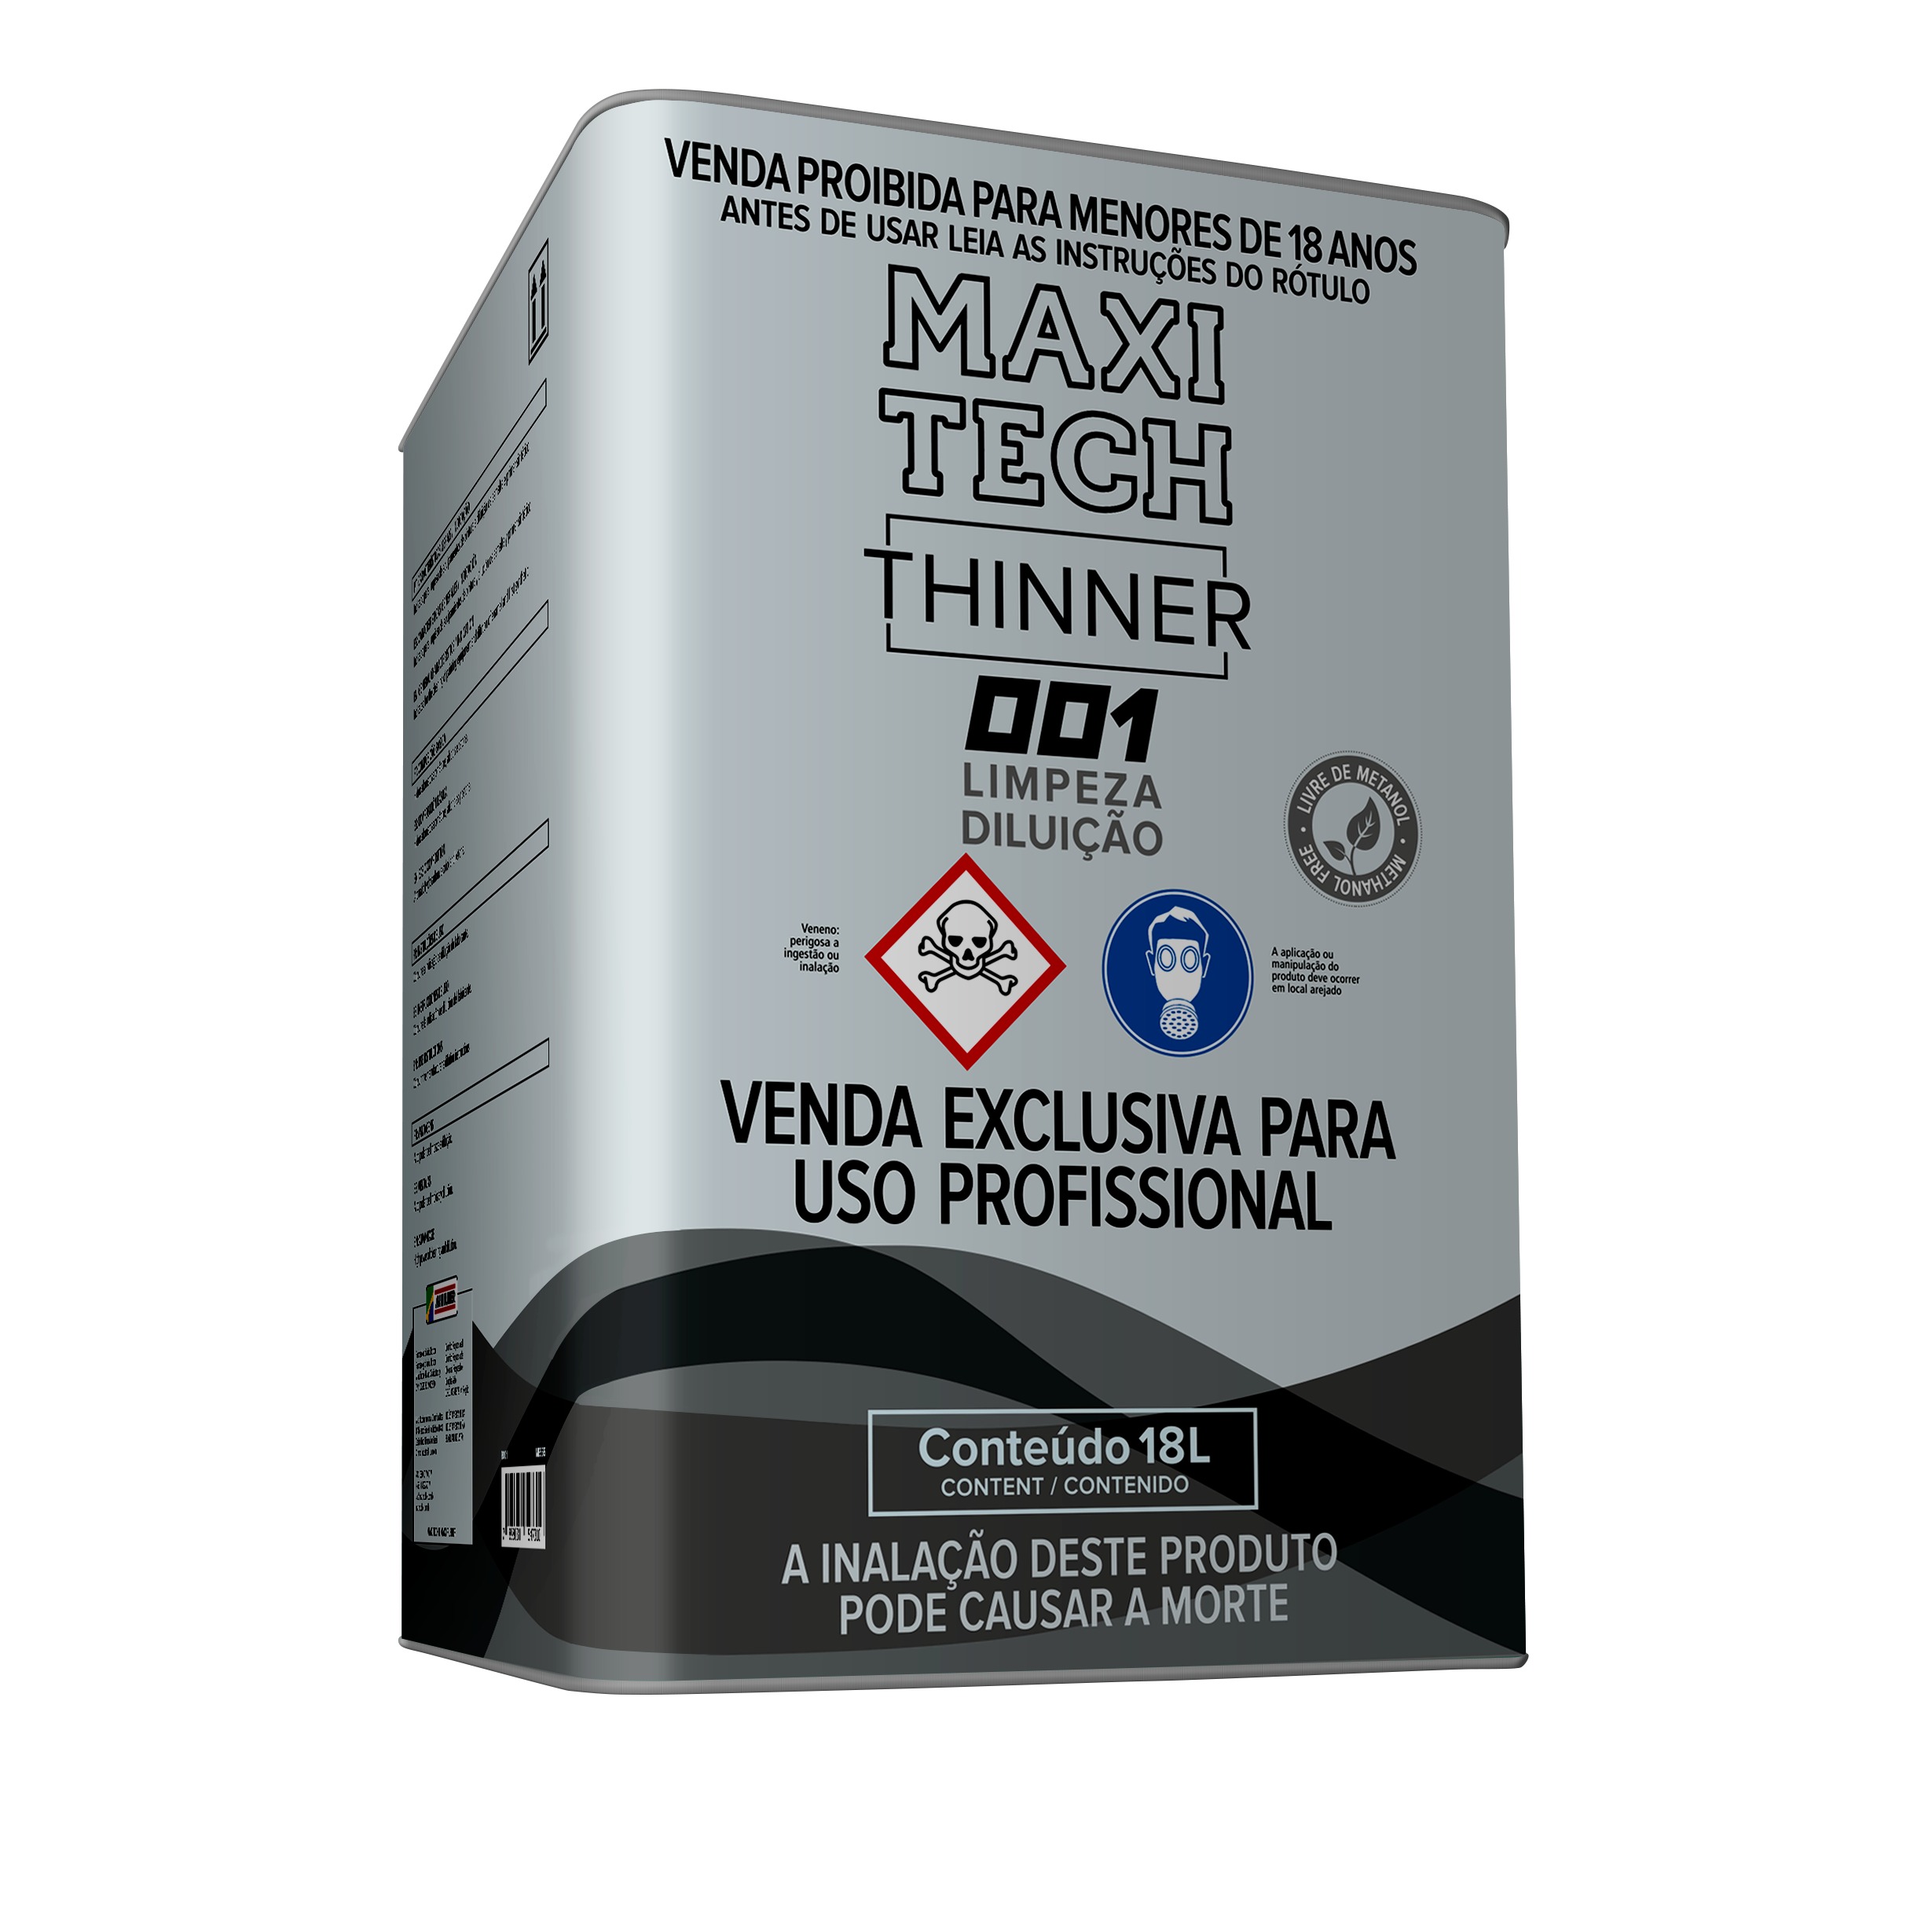 Thinner 001 - 18L